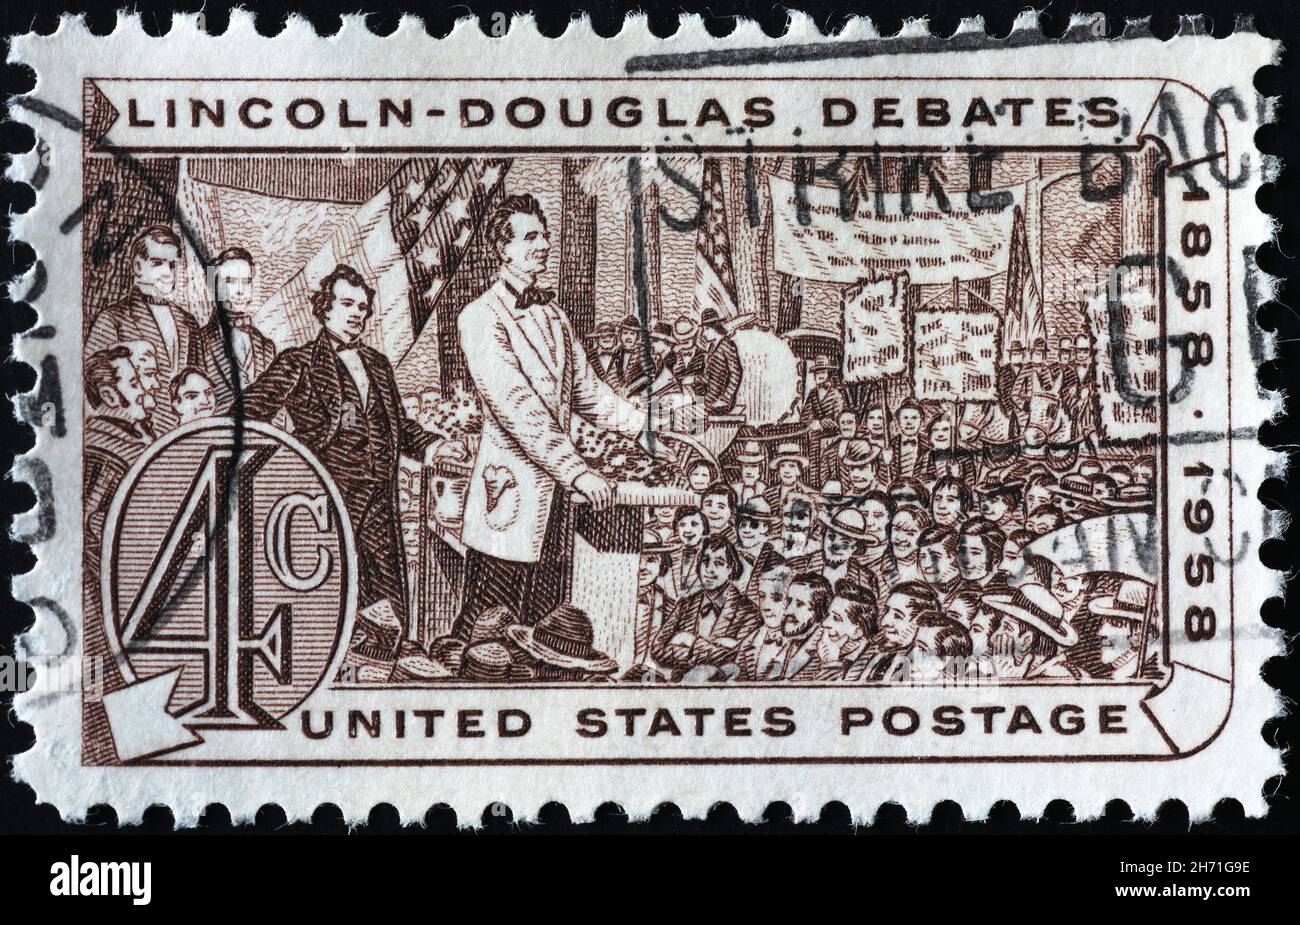 Lincoln-Douglas debates on american postage stamp Stock Photo